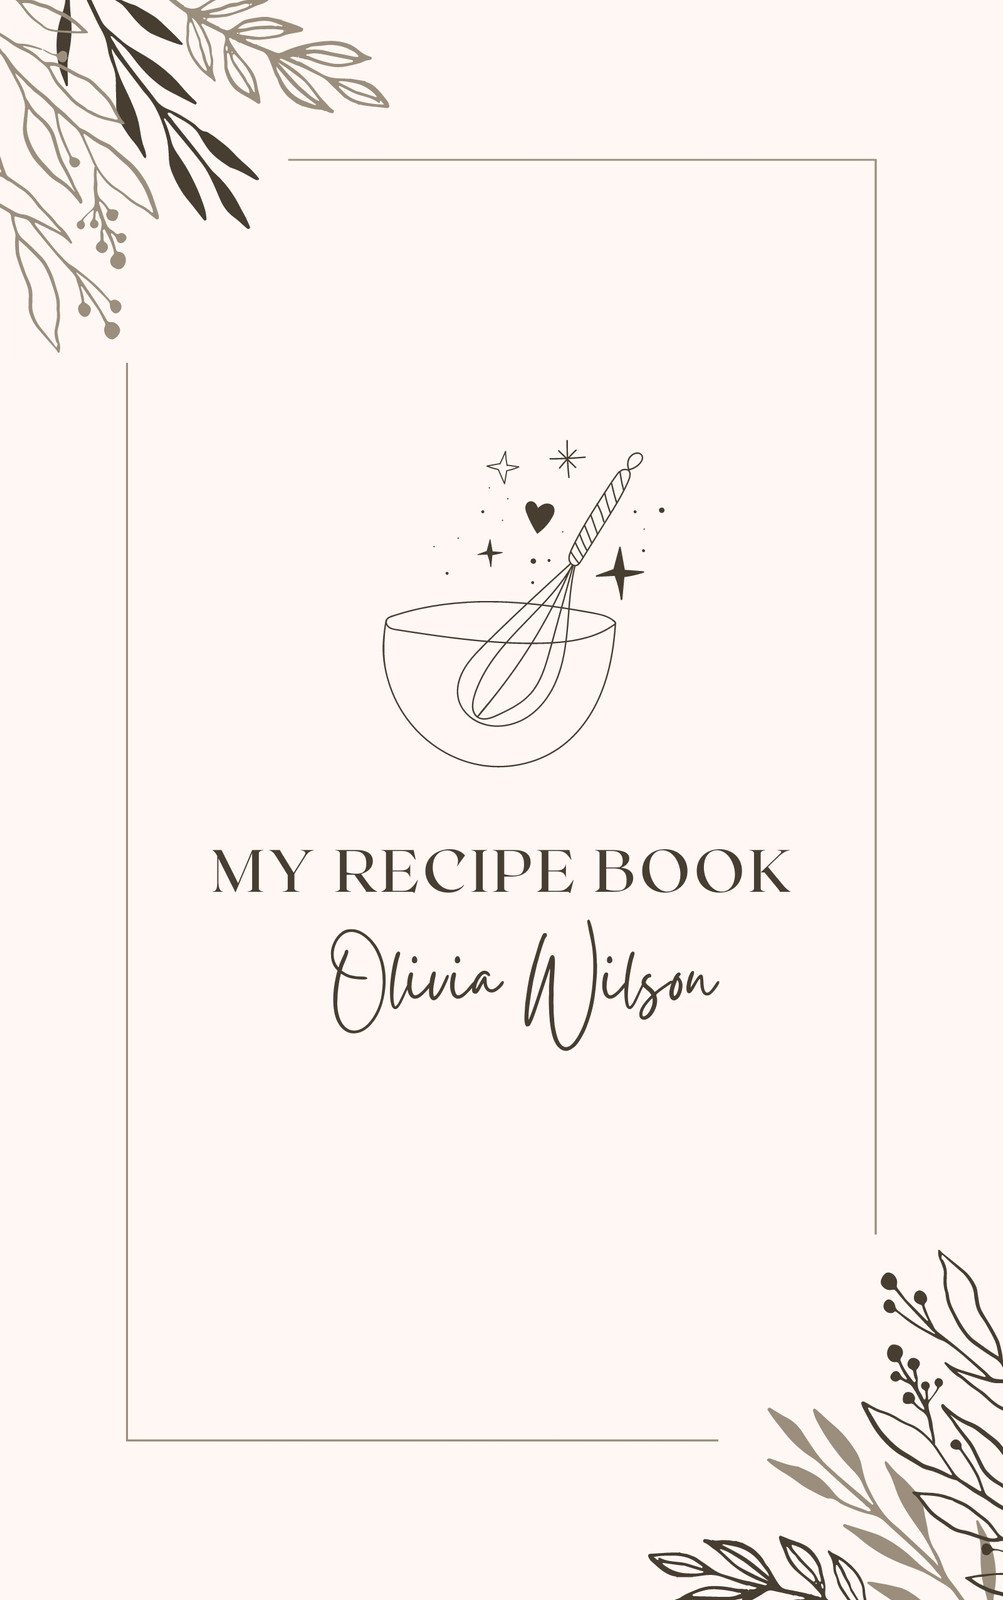 https://marketplace.canva.com/EAFaYIaUKG0/2/0/1003w/canva-beige-elegant-my-recipe-book-cover-RZyTY-2psn8.jpg